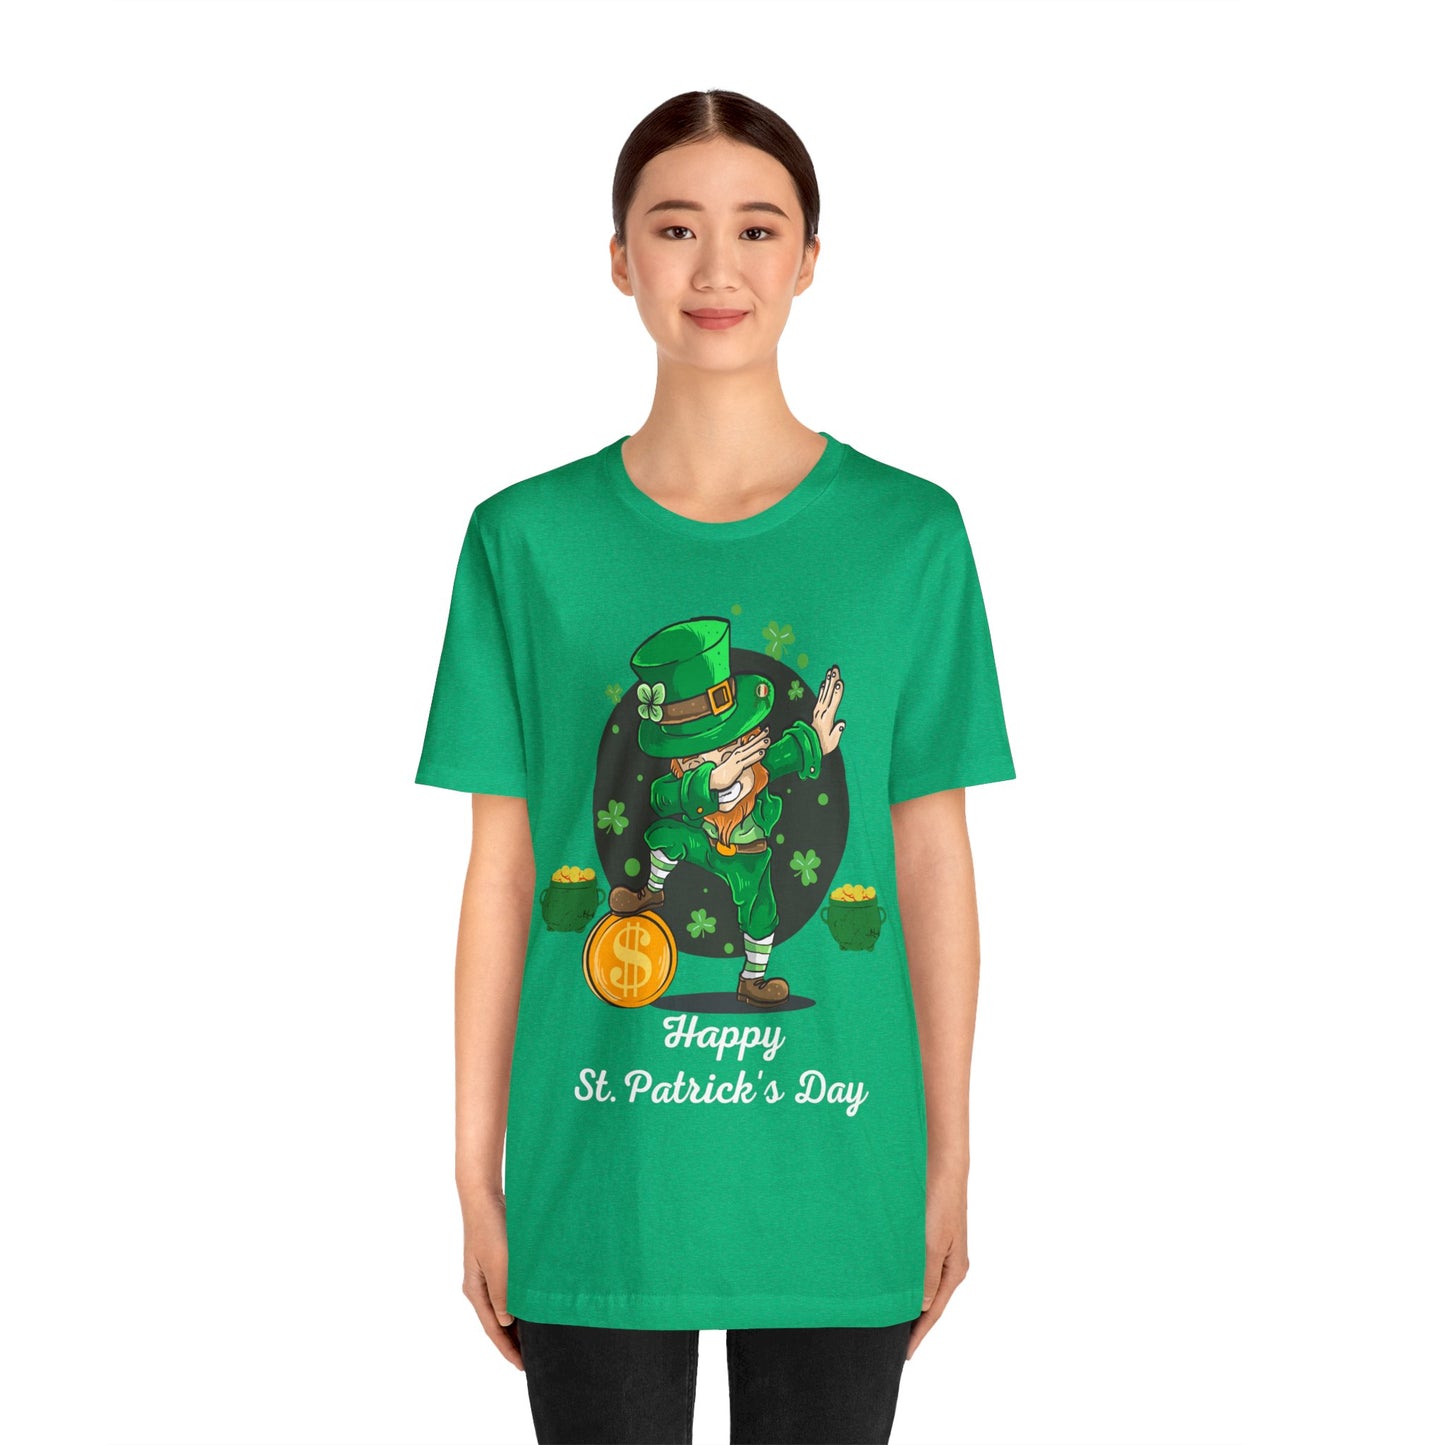 Happy St Patrick's Day shirt